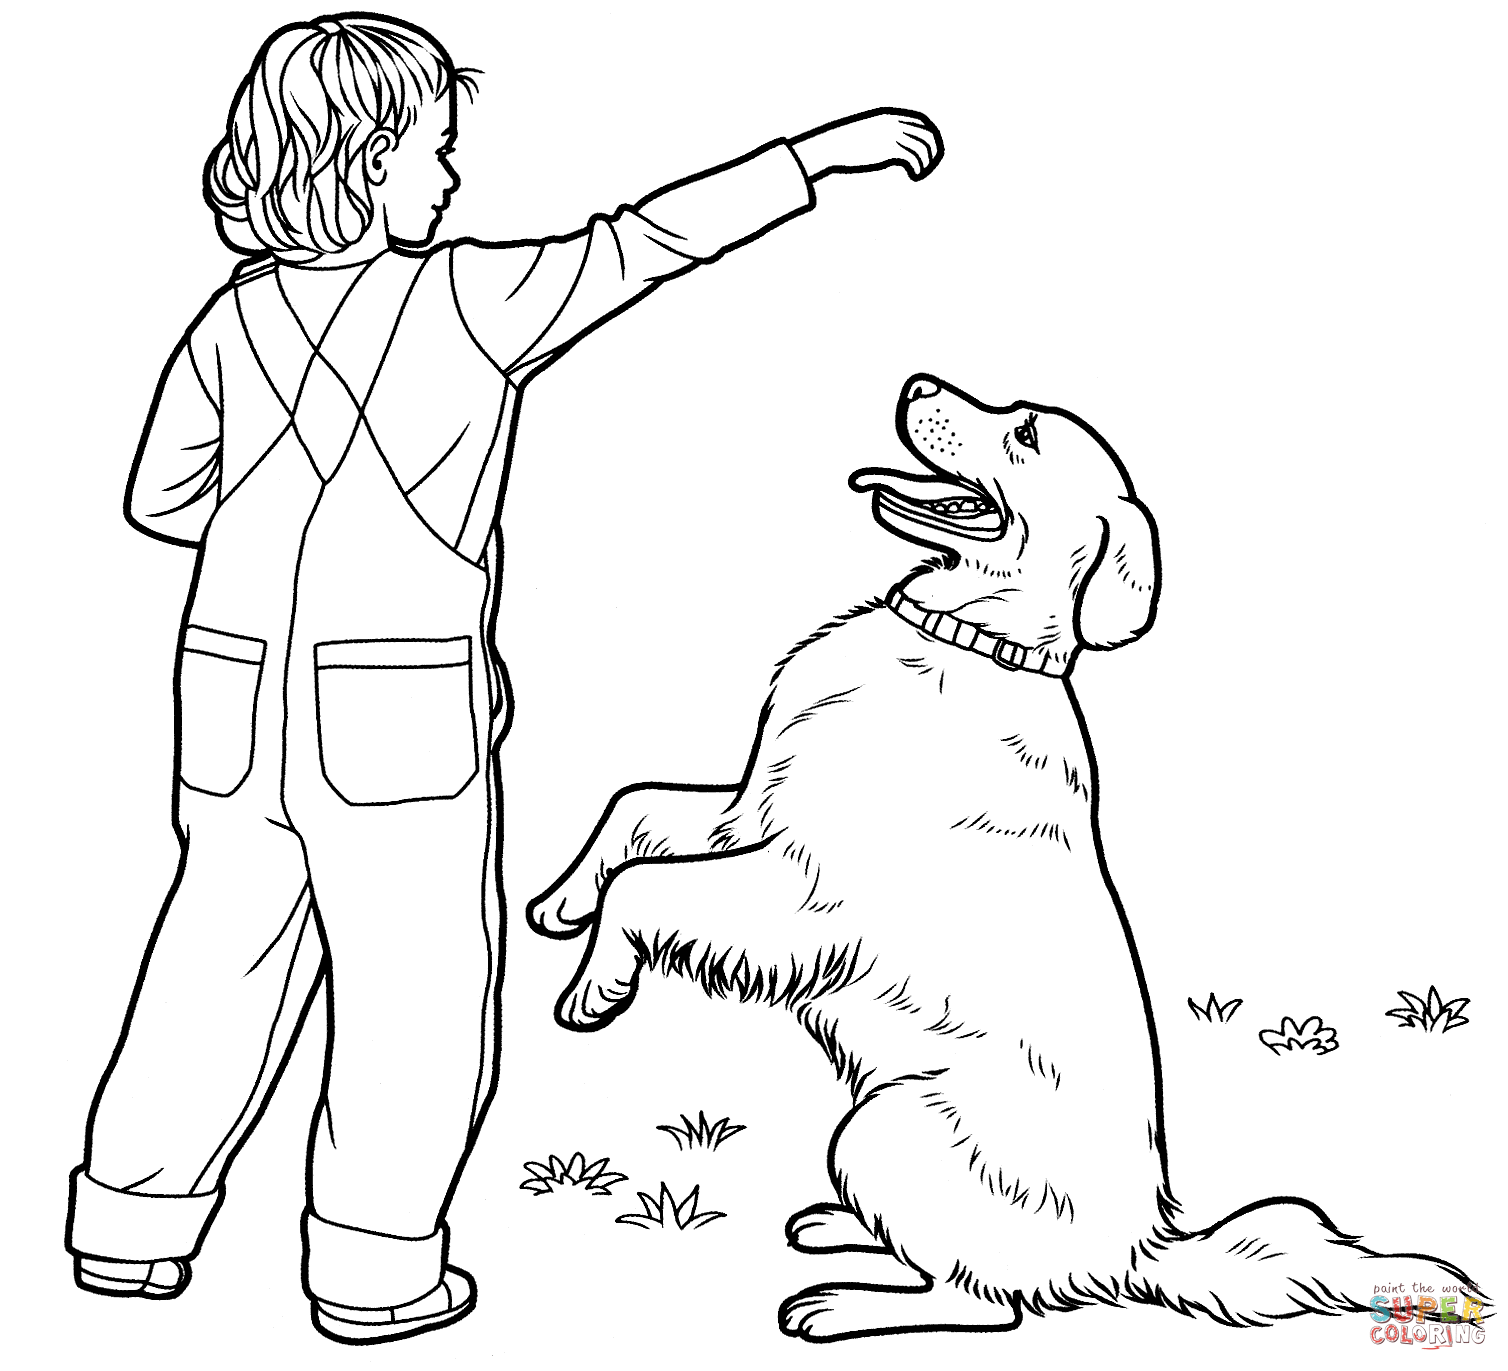 Labrador retriever coloring page | Free Printable Coloring Pages